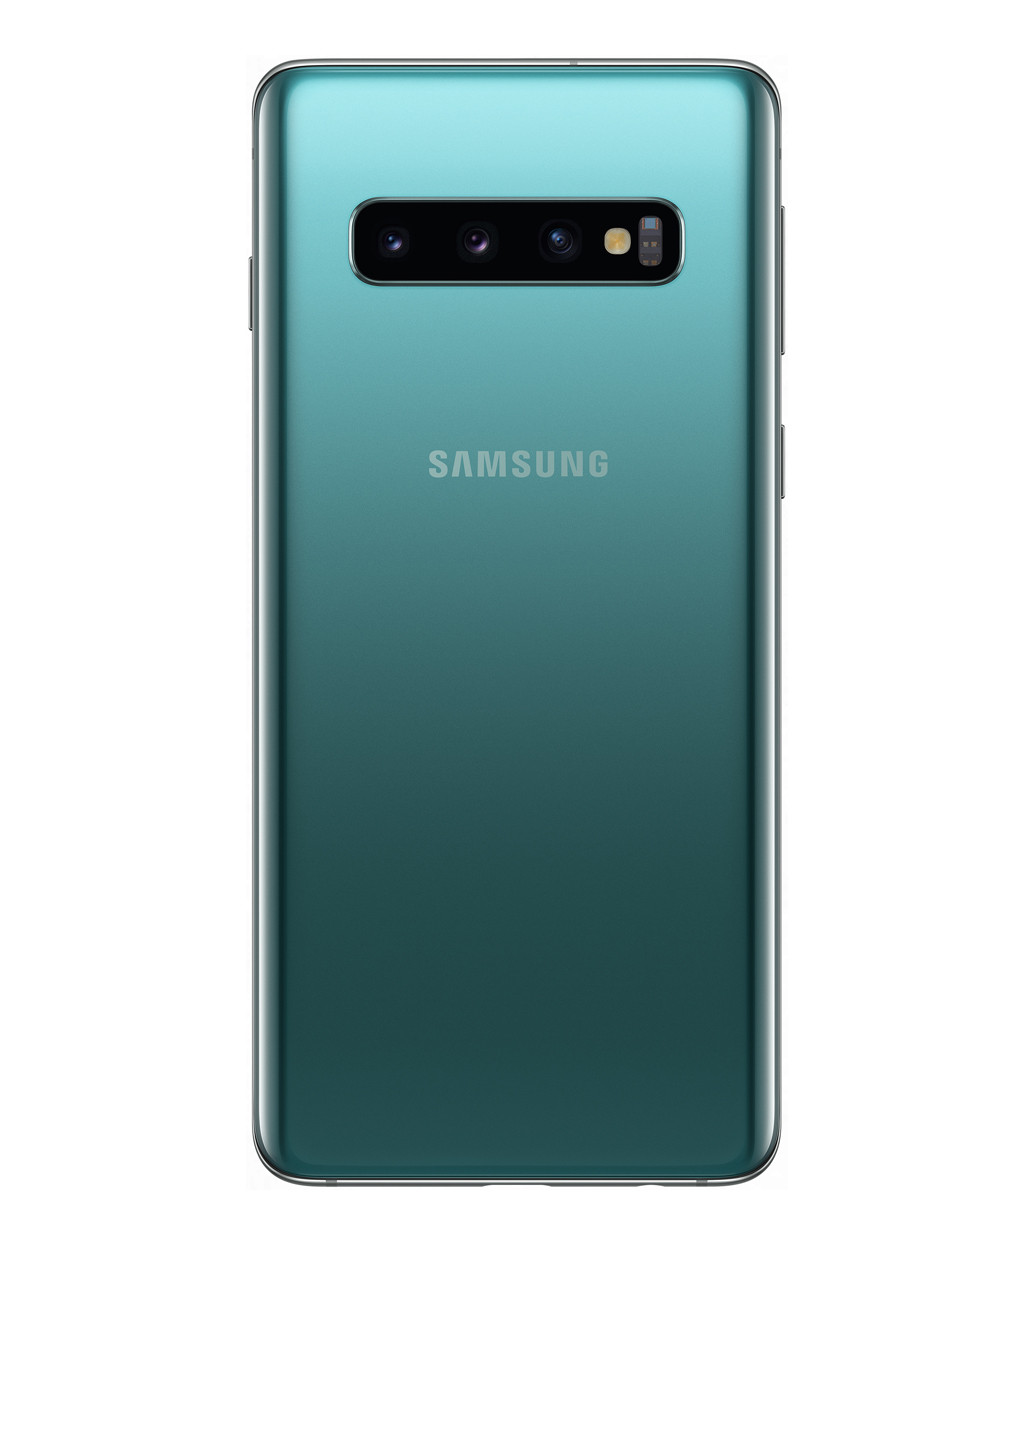 Смартфон Samsung Galaxy S10 8/128GB Green (SM-G973FZGDSEK) зелёный